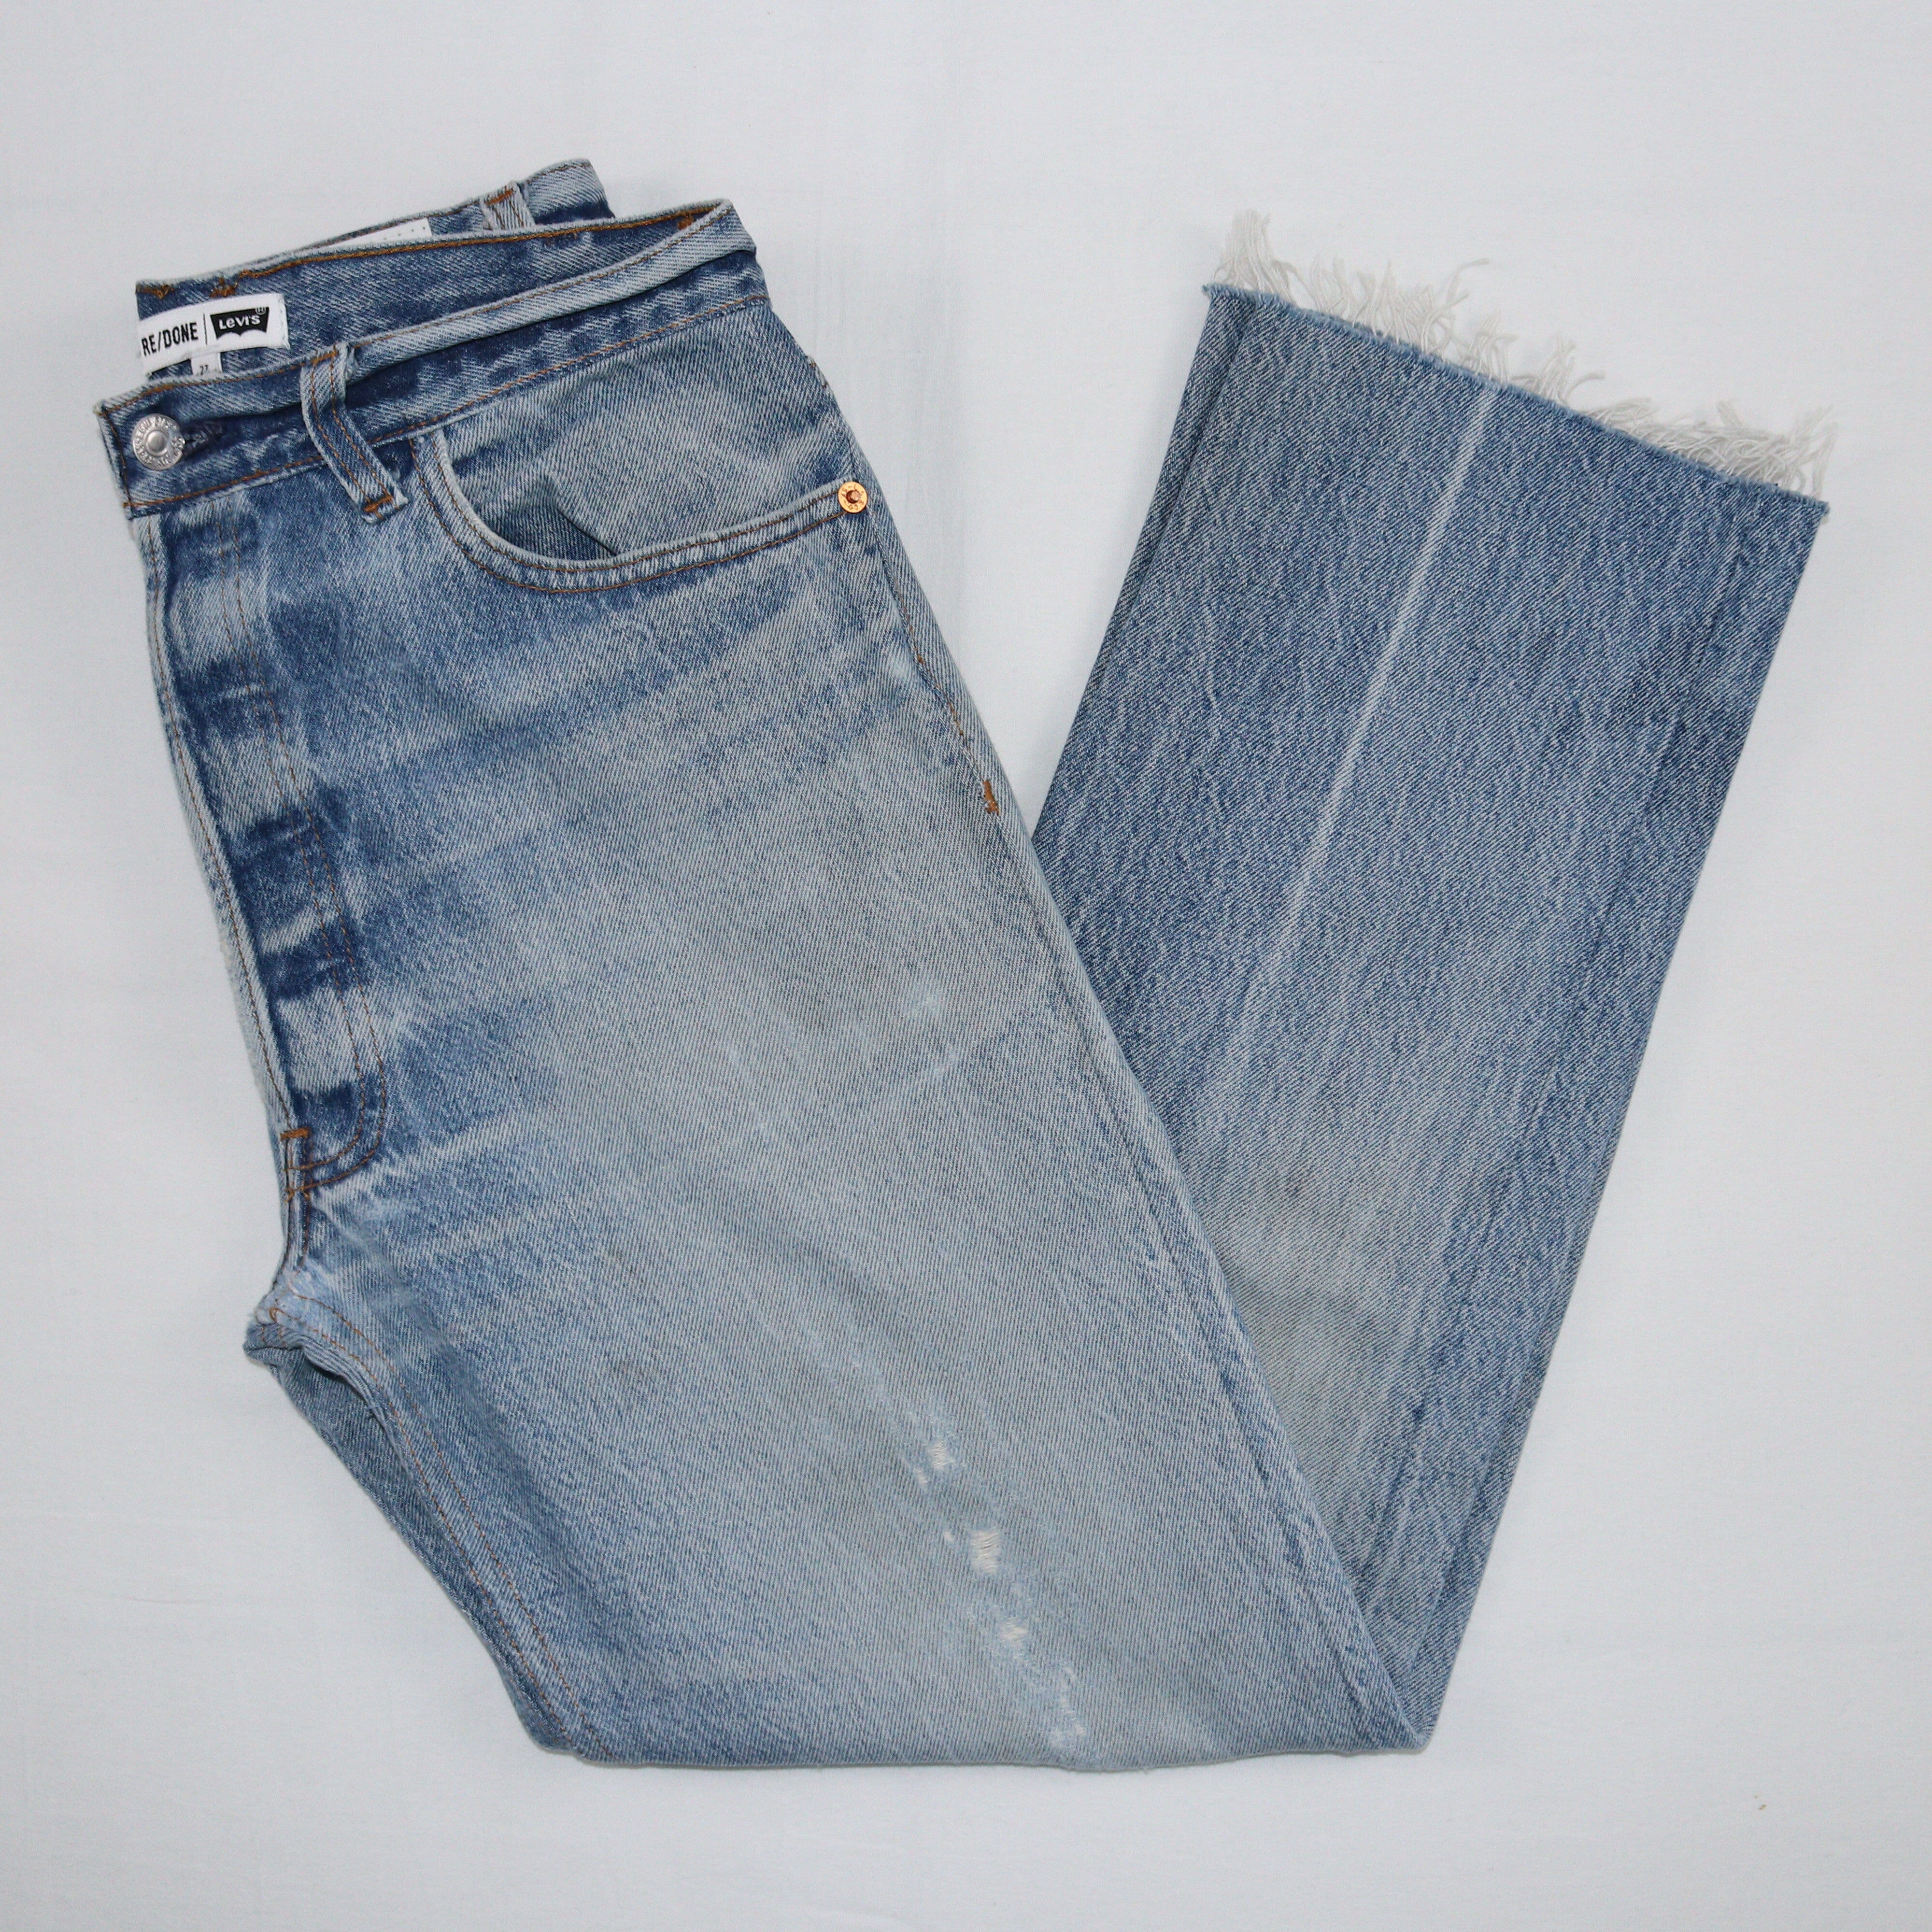 White/Blue Denim Straight Cut Pants Clothings RE/DONE Levis 